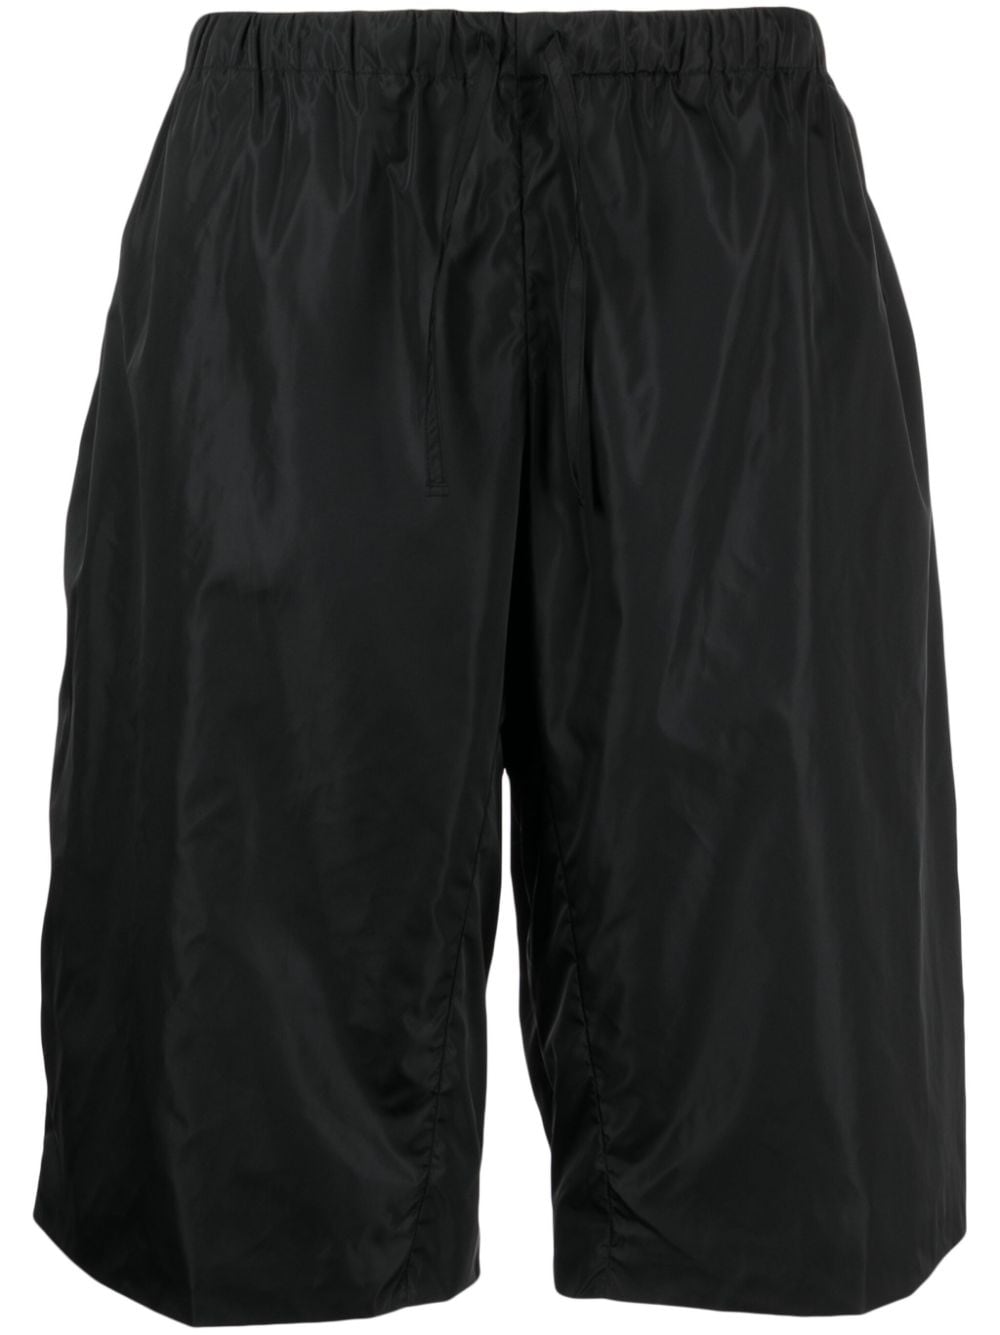 Image 1 of Alexander Wang elastic-waist bermuda shorts